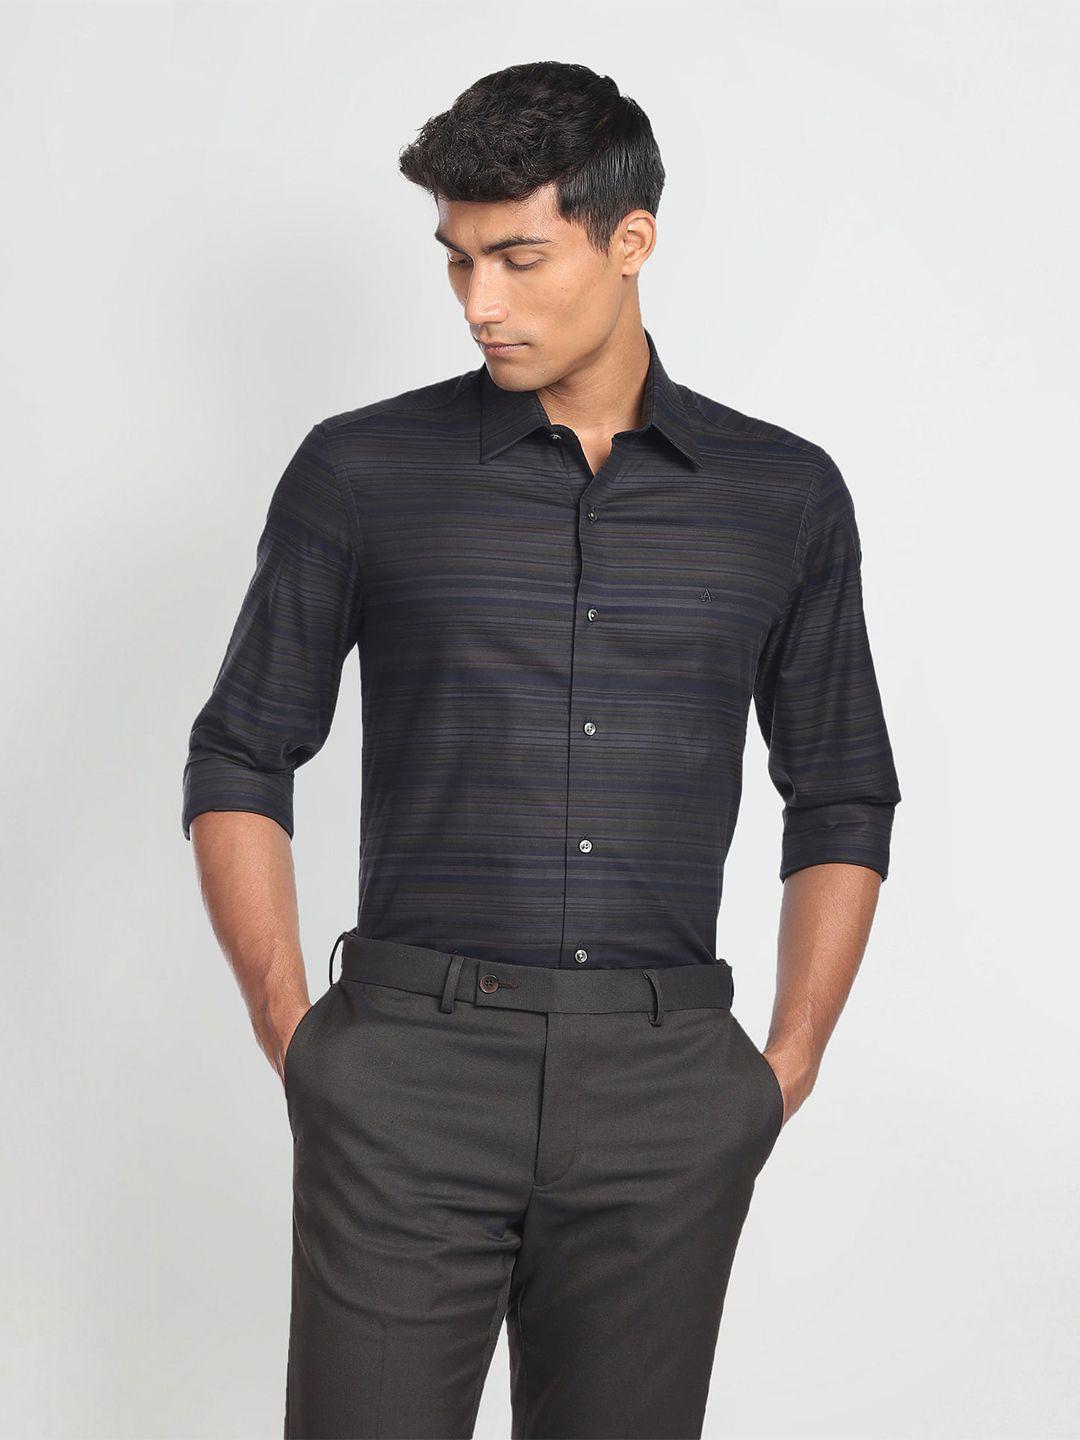 arrow new york striped slim fit classic cotton formal shirt